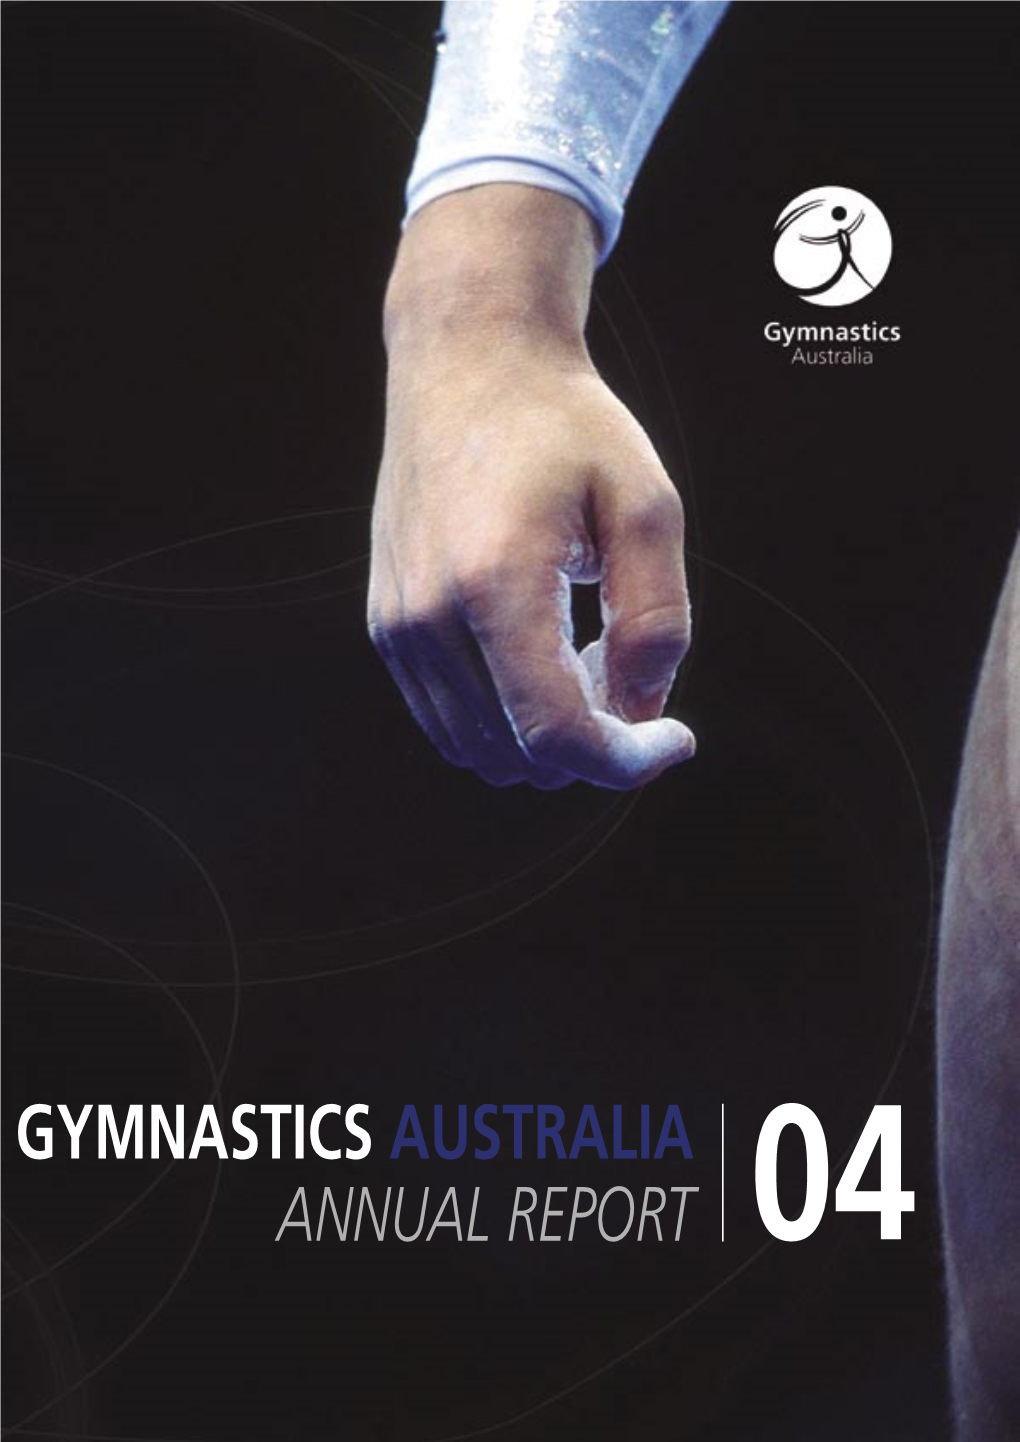 Gymnastics Australia Annual Report 04 Gymnastics Australia Gymnastics - Healthy and Active Lives for Annual Report Everybody